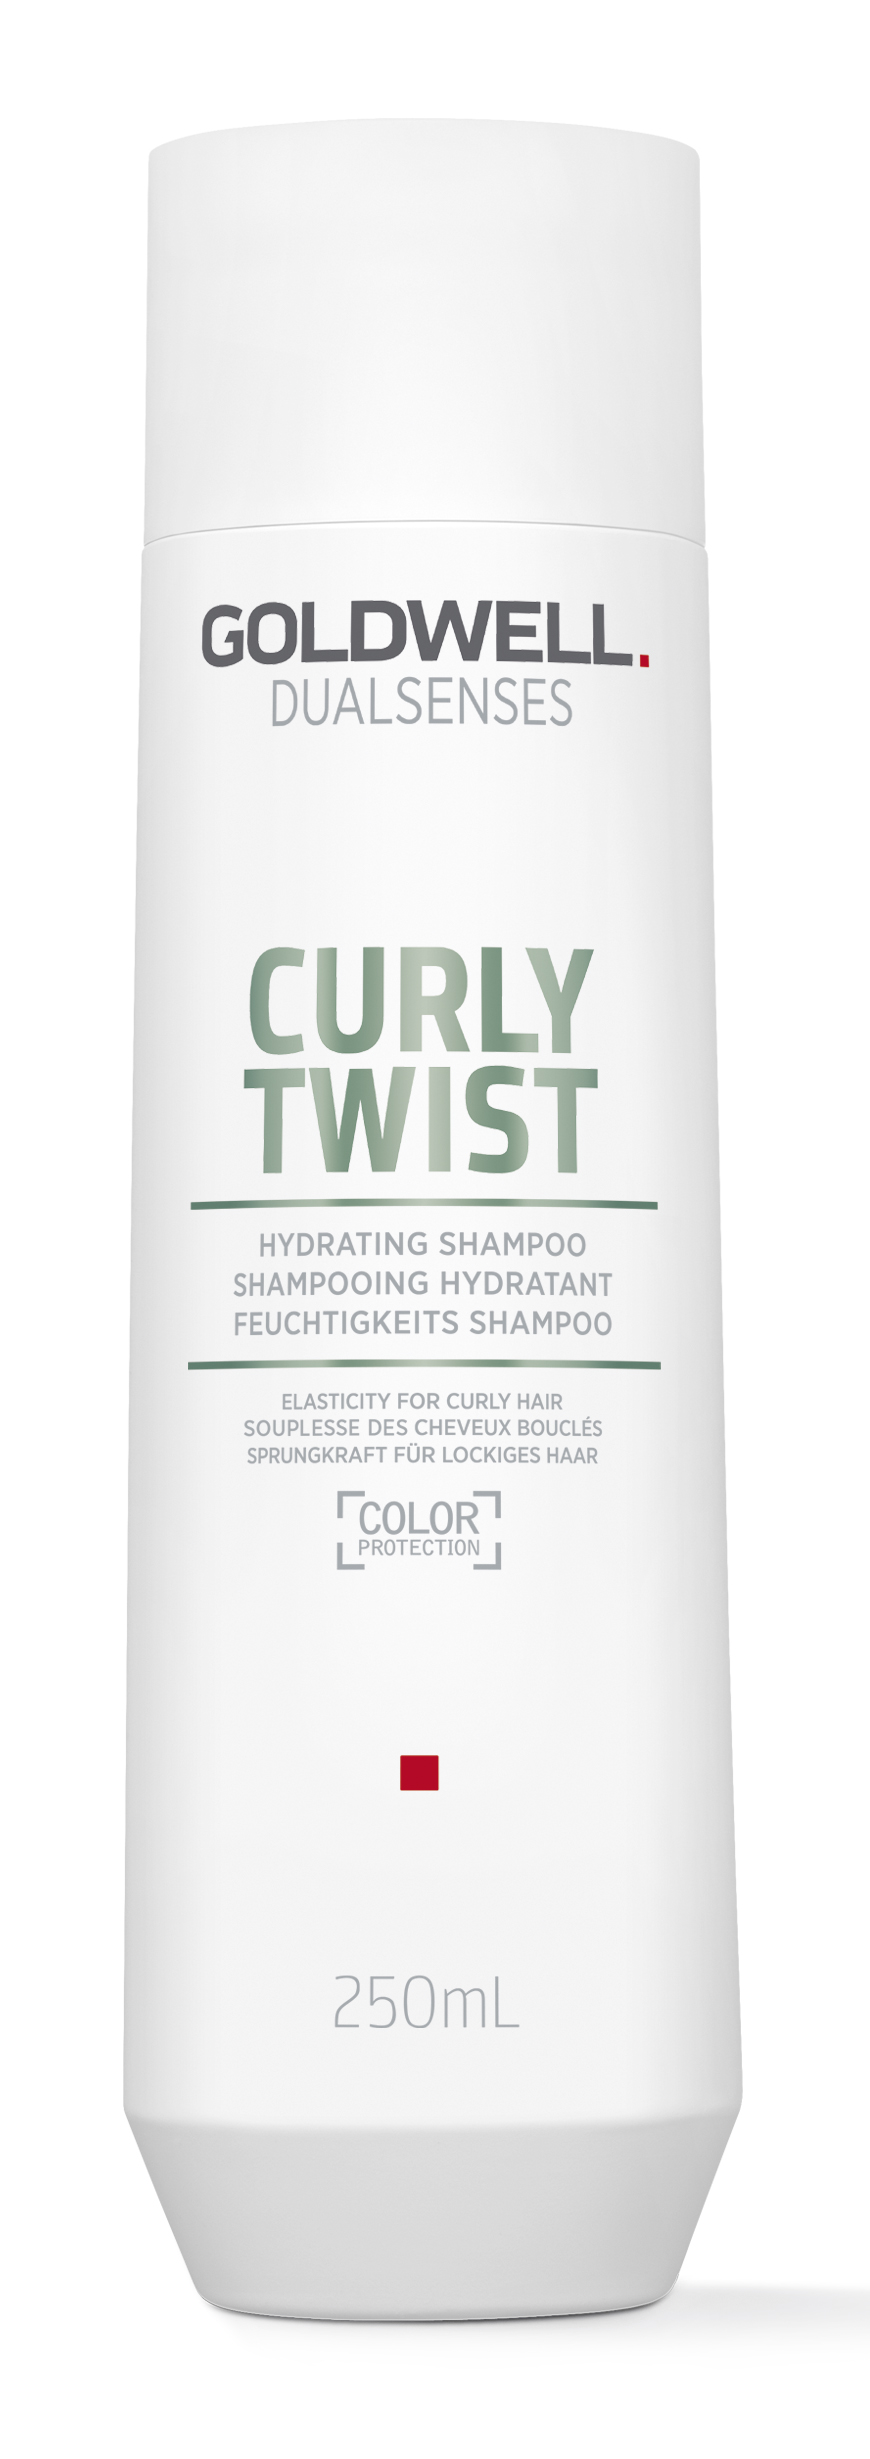 Dual Senses Curly Twist Shampoo